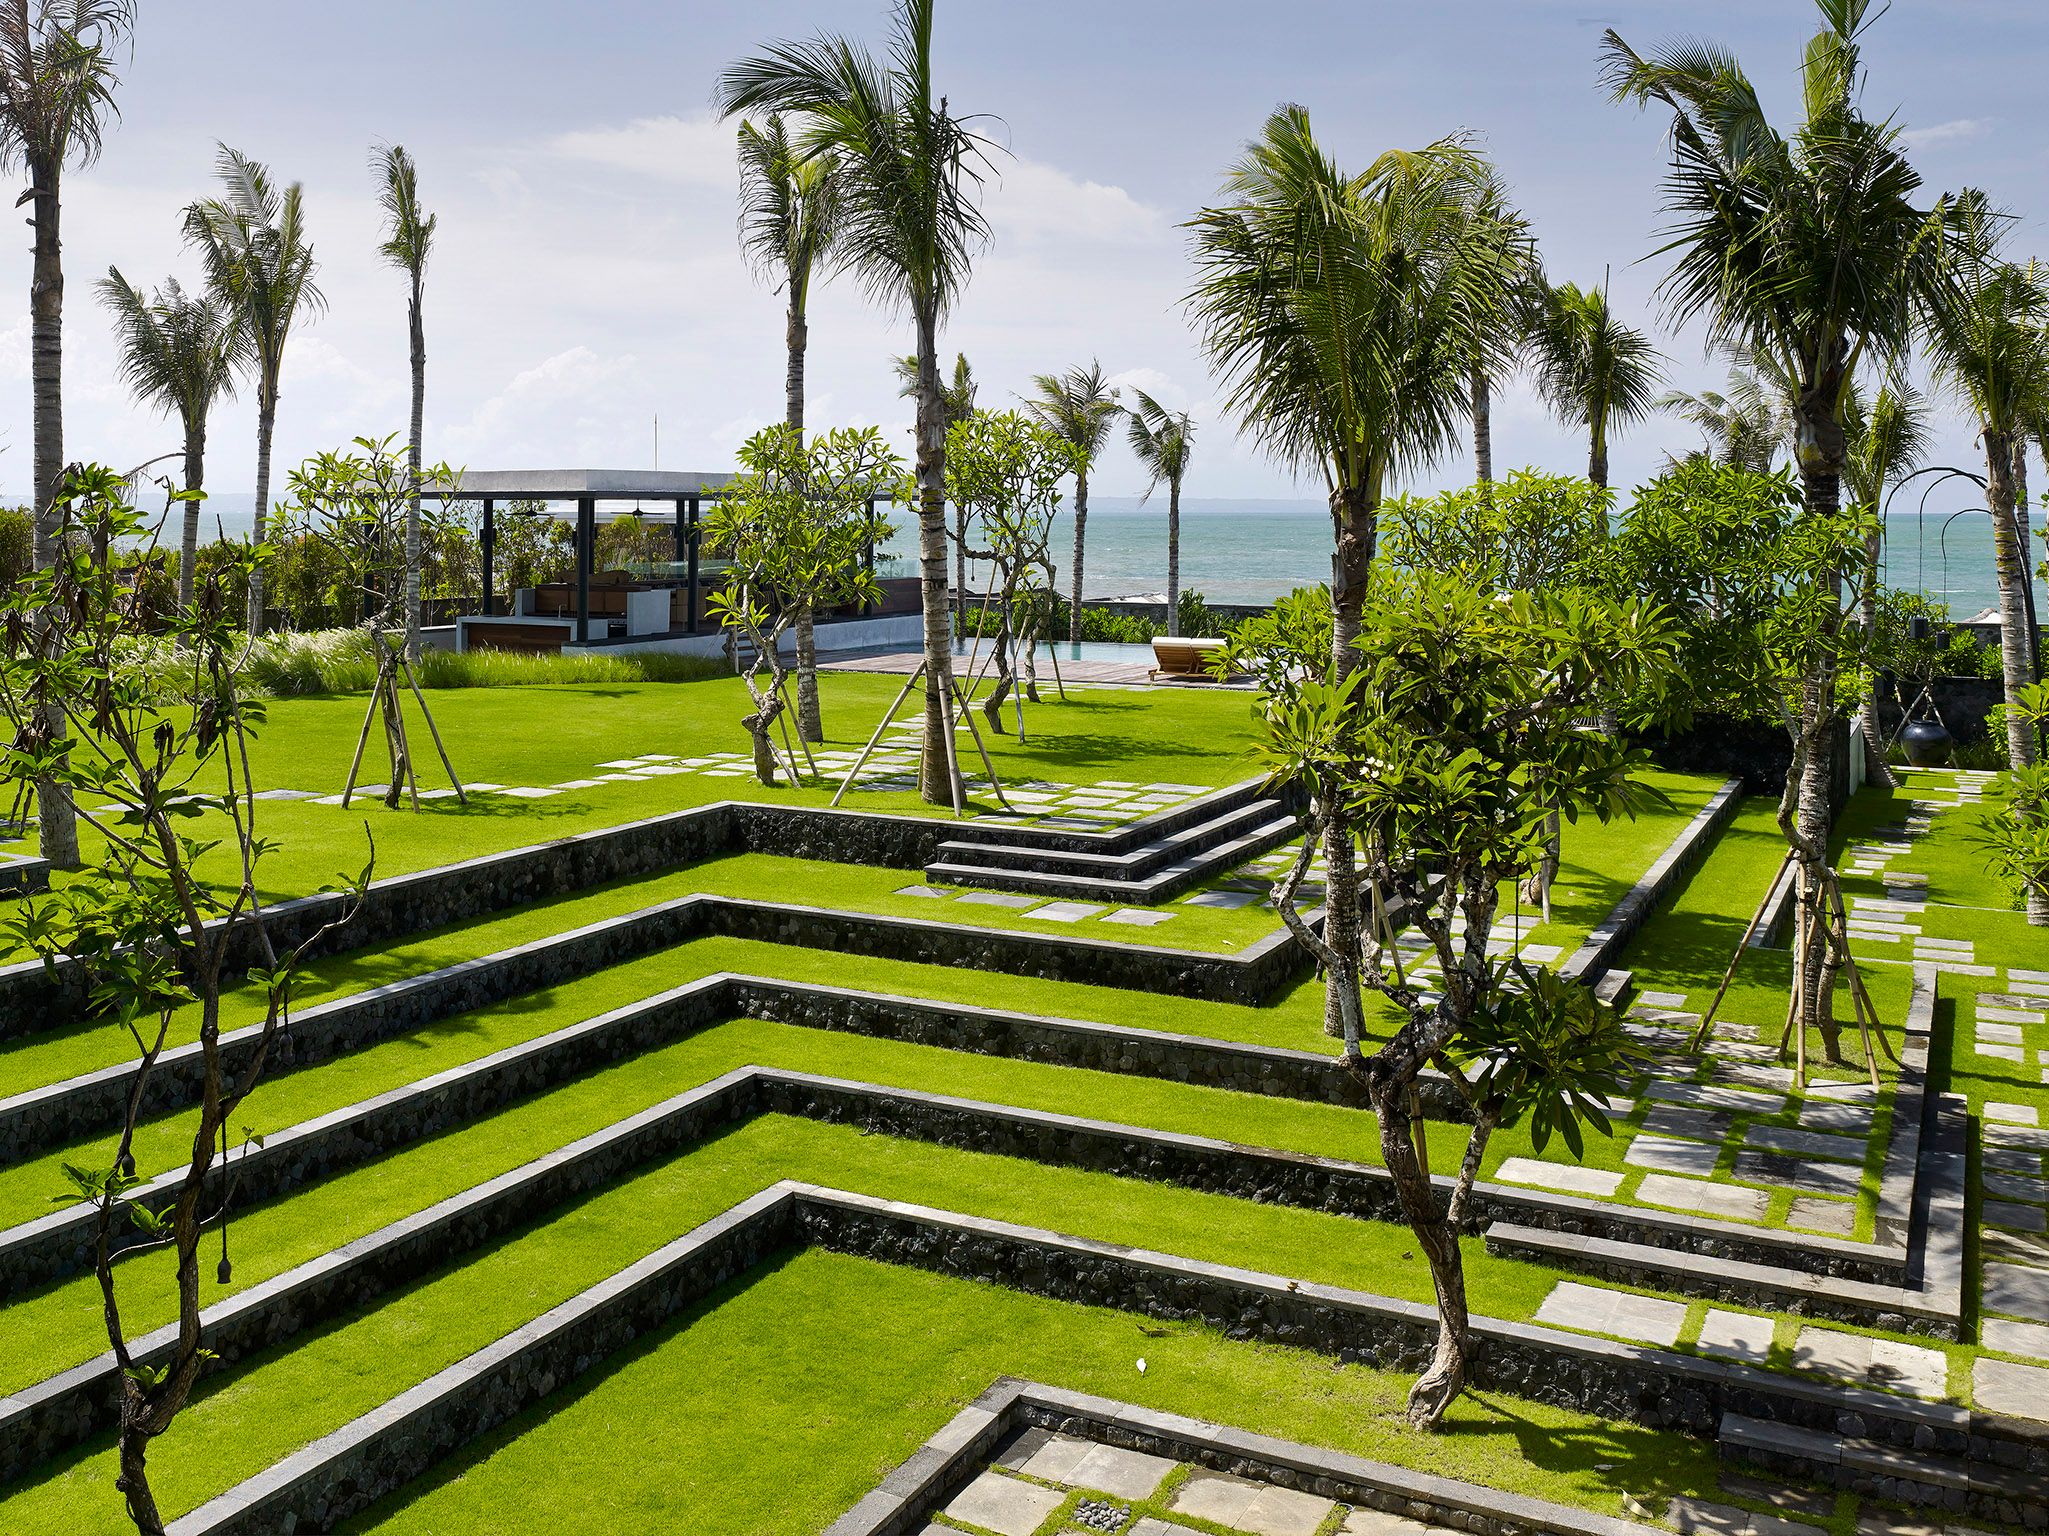 Arnalaya Beach House - Terraced garden